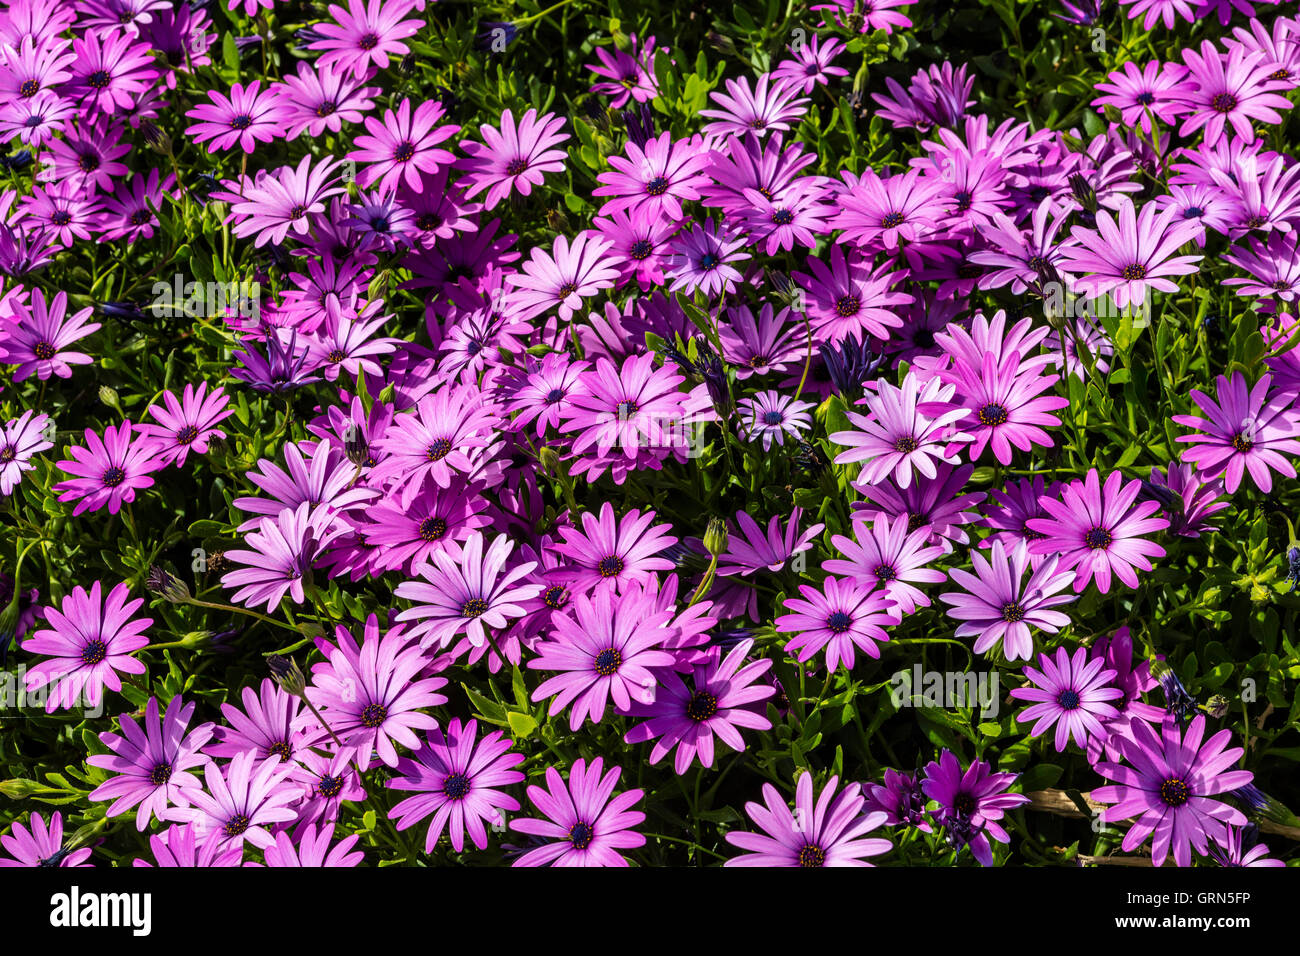 Carpet of Purple Osteospermum African daisies close-up in a garden.p Stock Photo